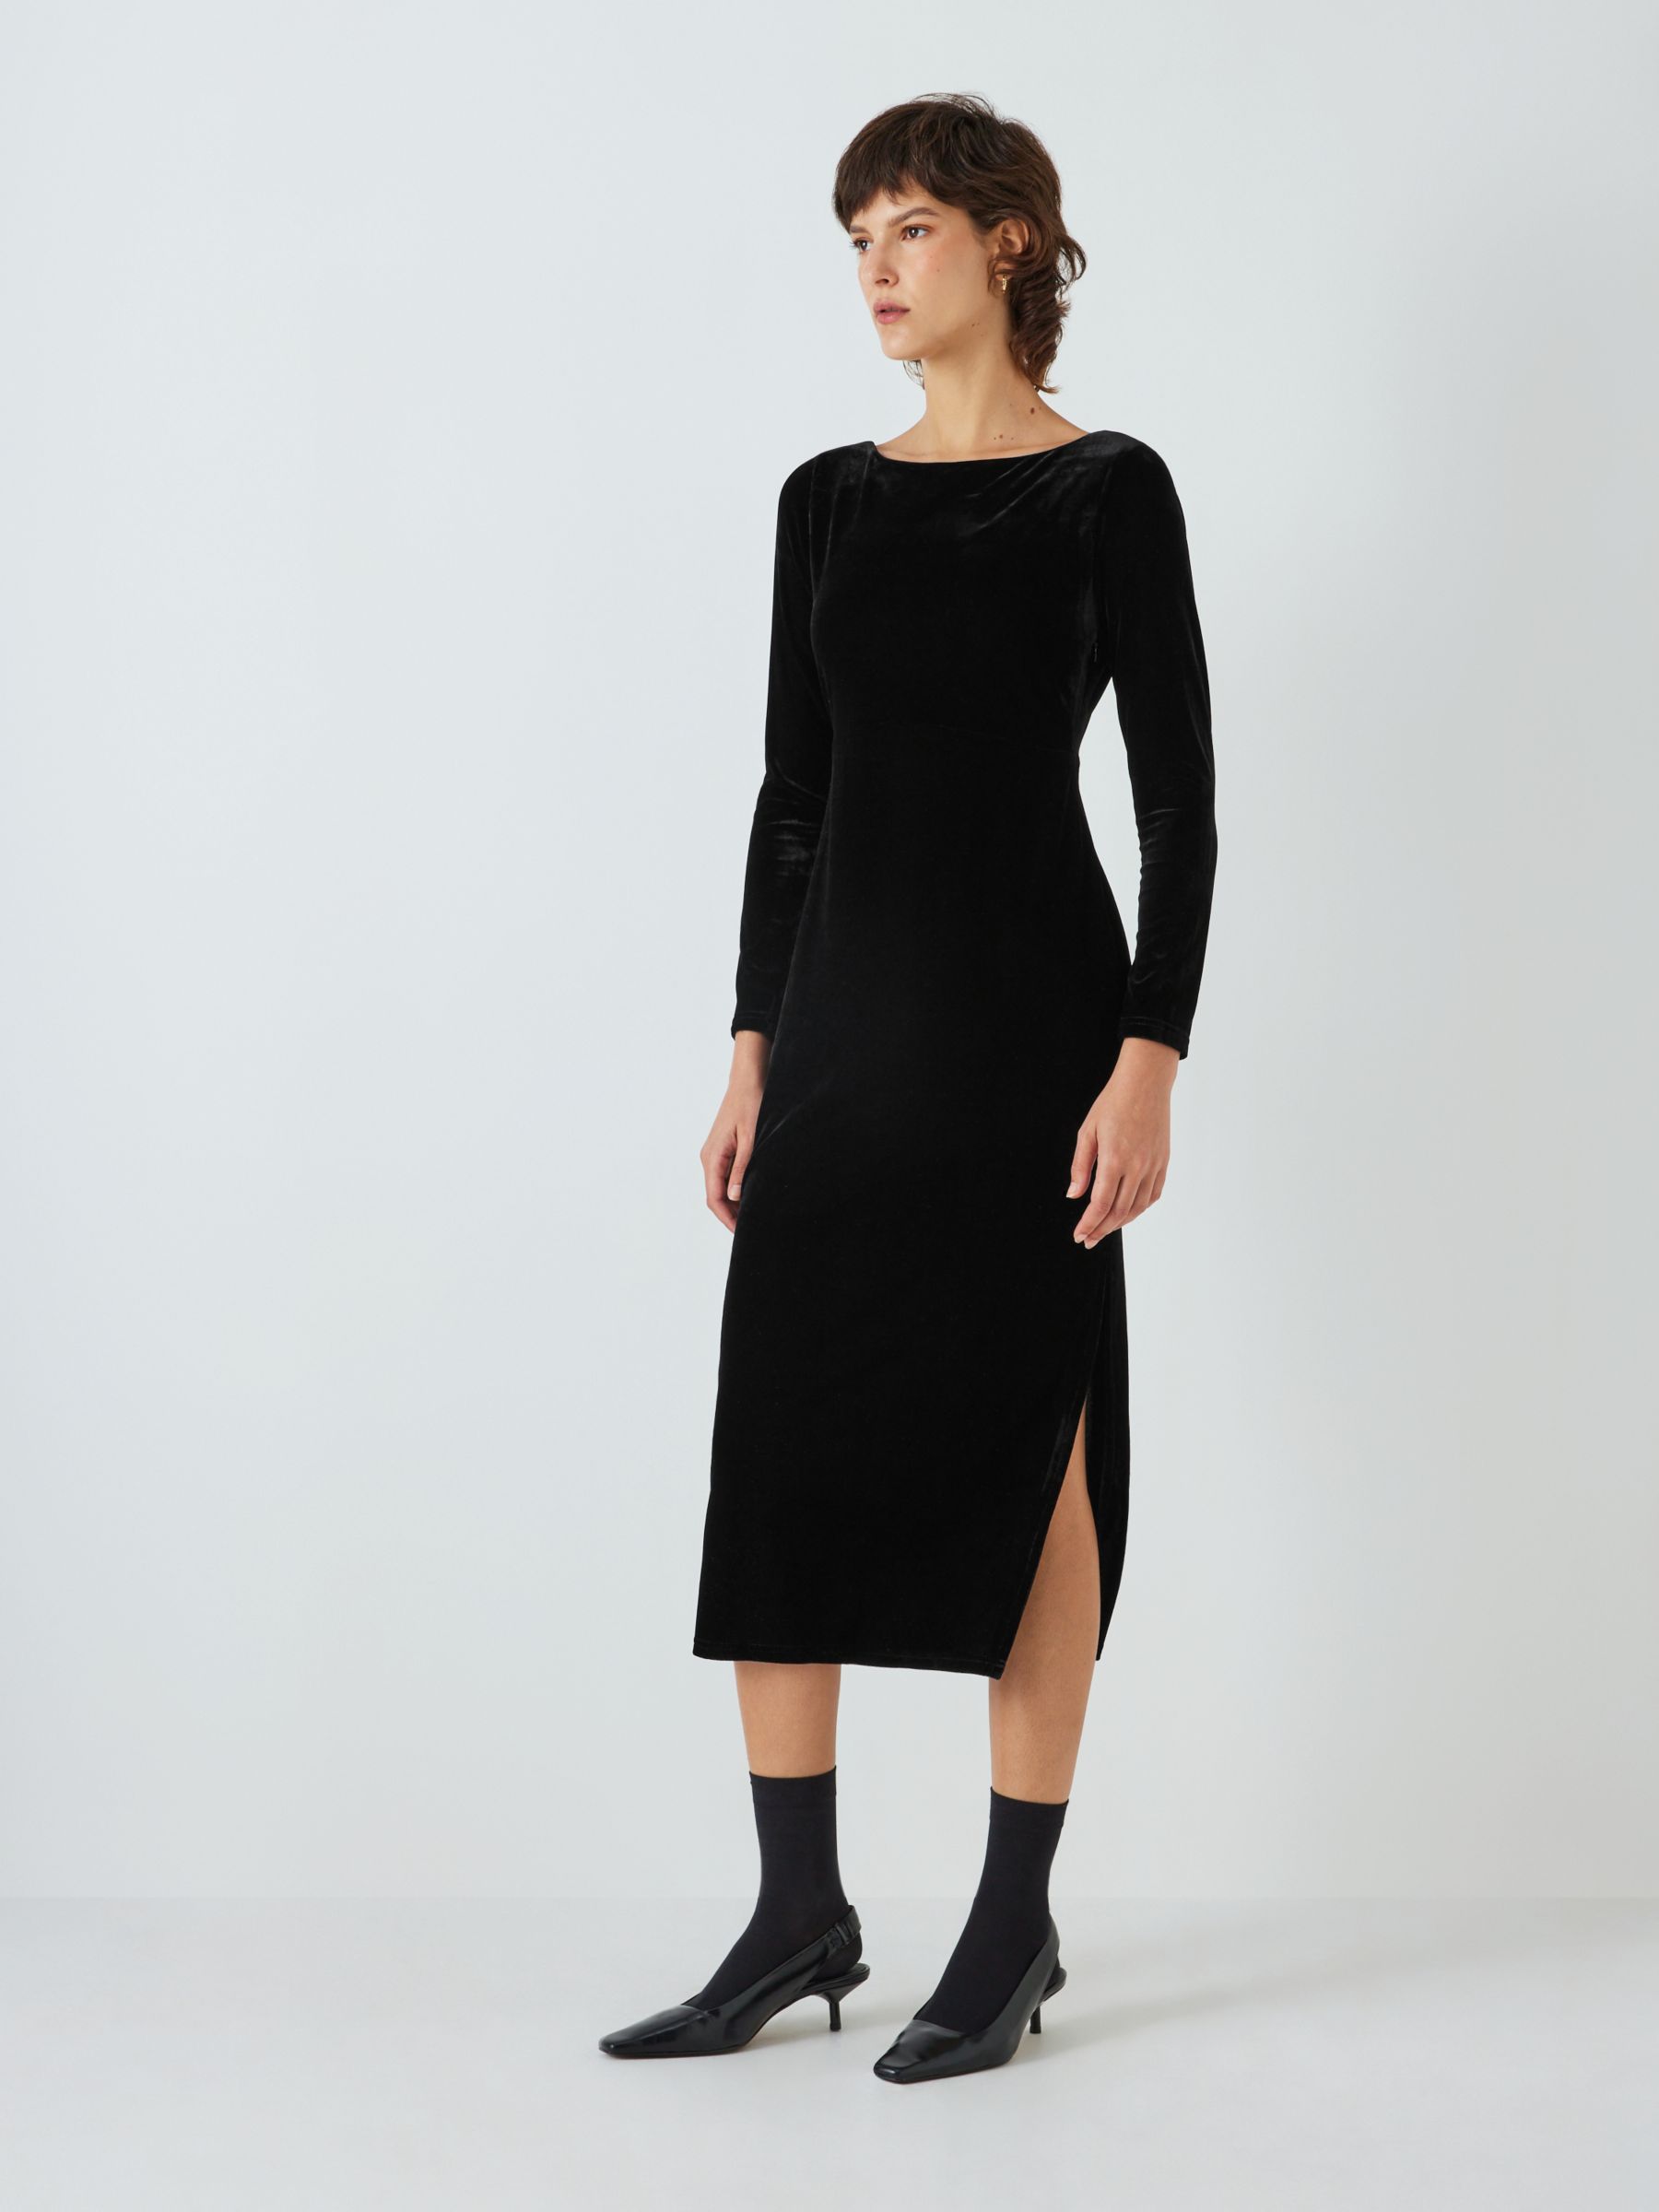 Style 200 Chanel Black dress Size 8 Wedding Guest Long Sleeve